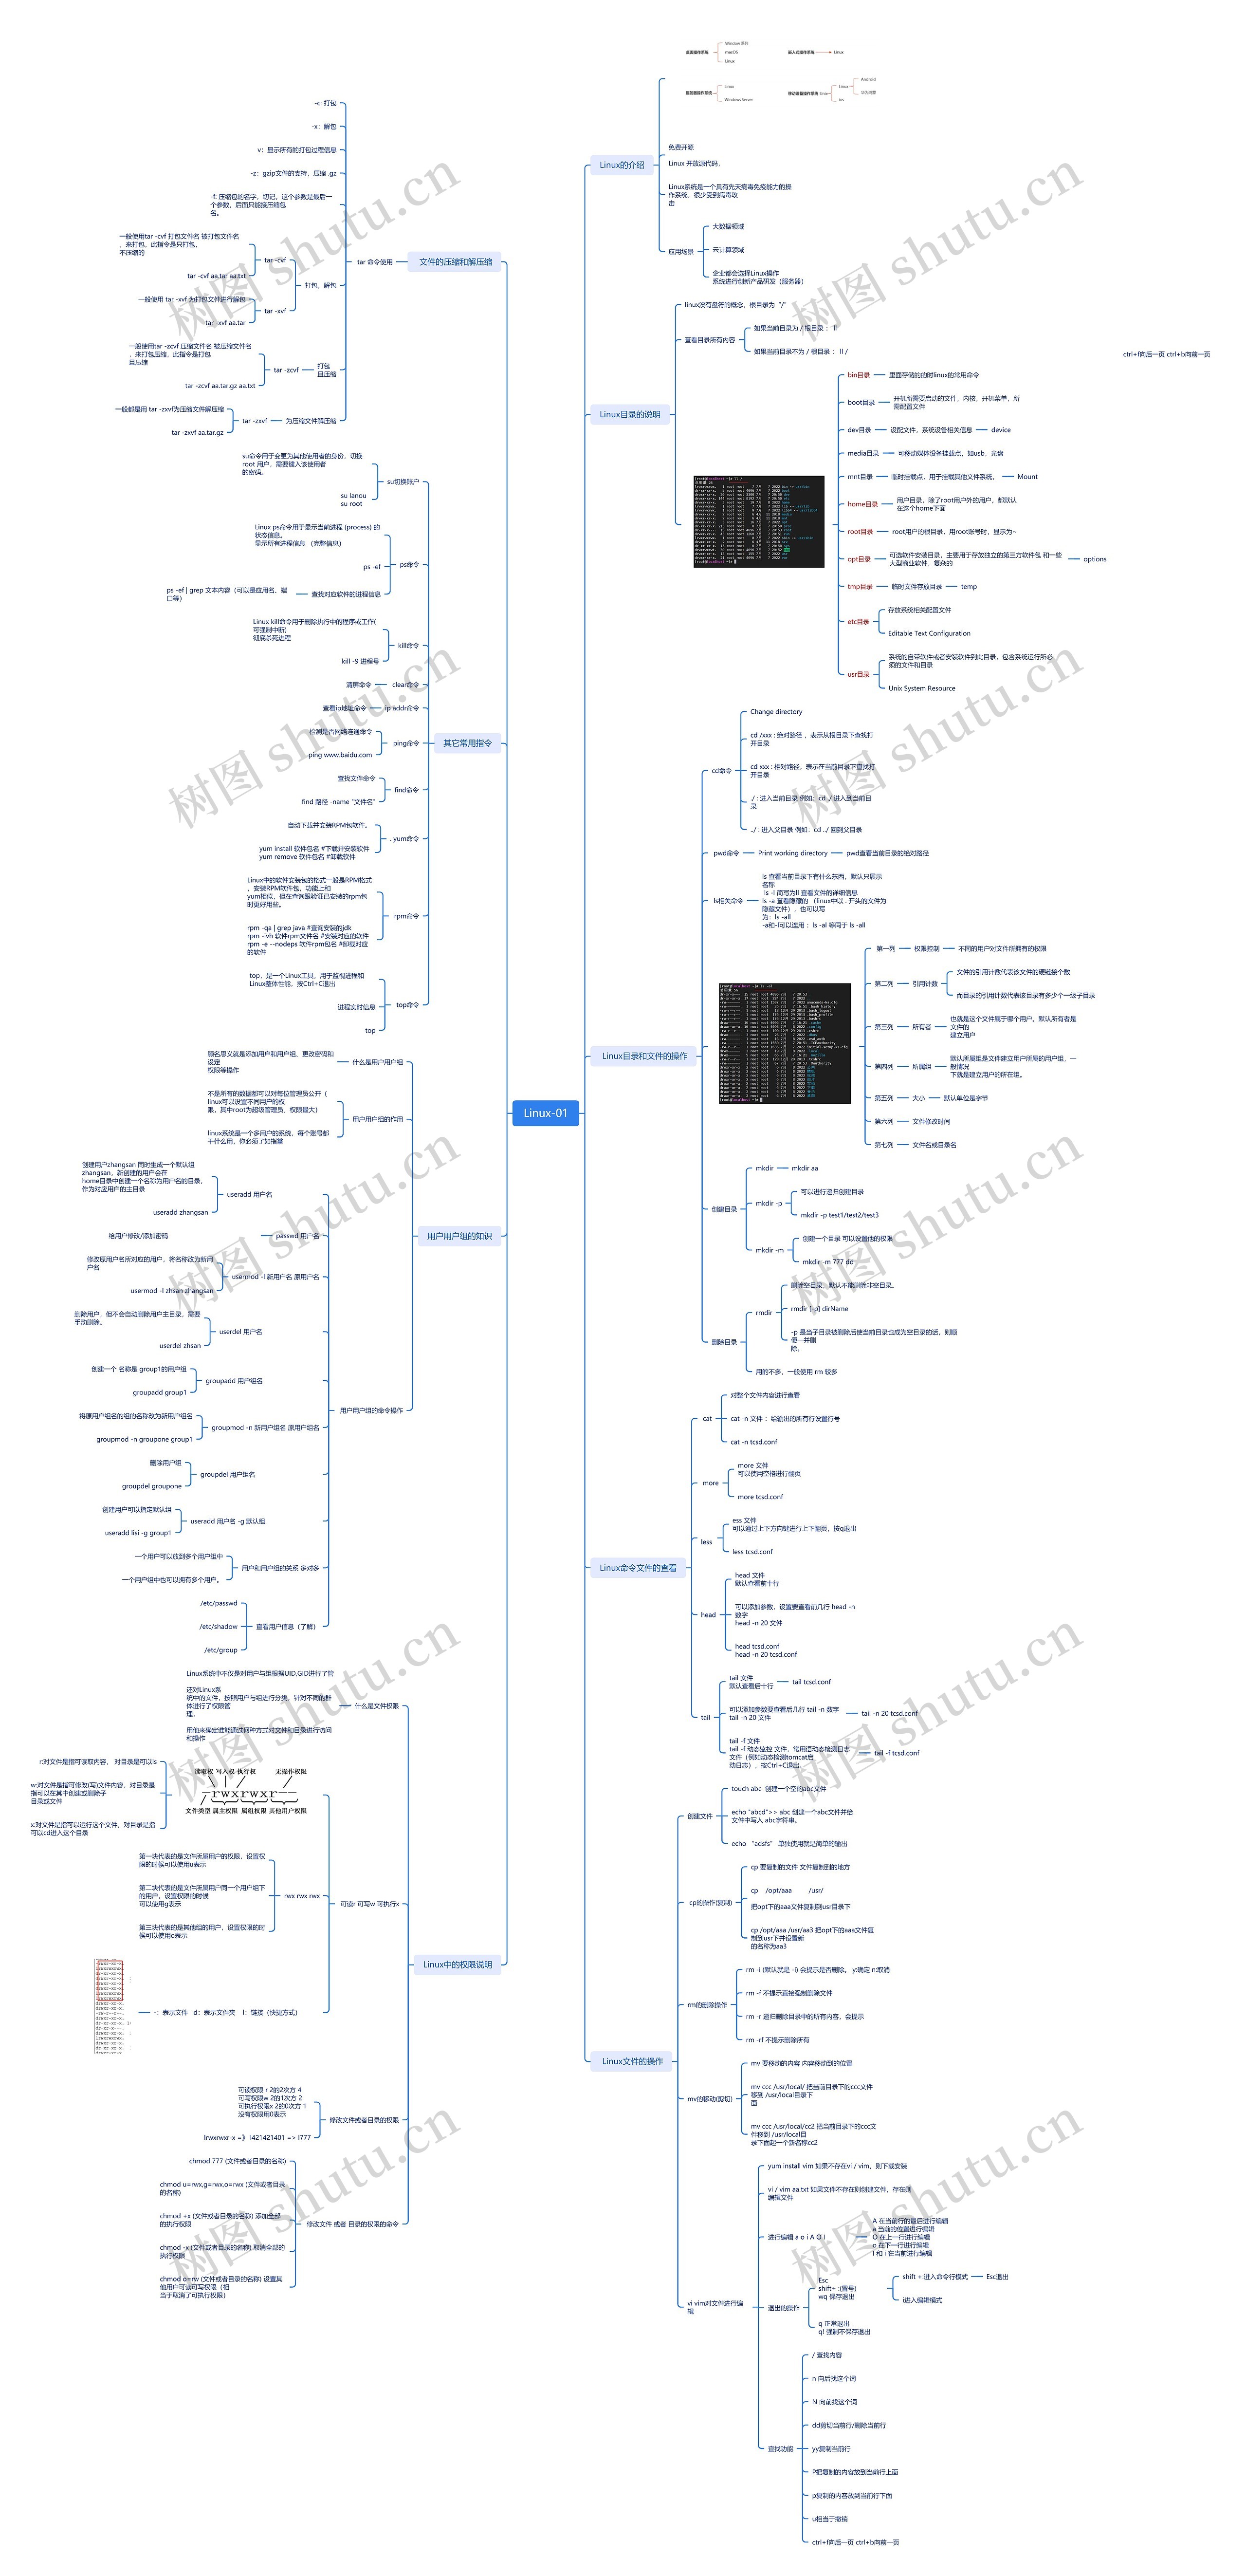 ﻿Linux基础知识脑图